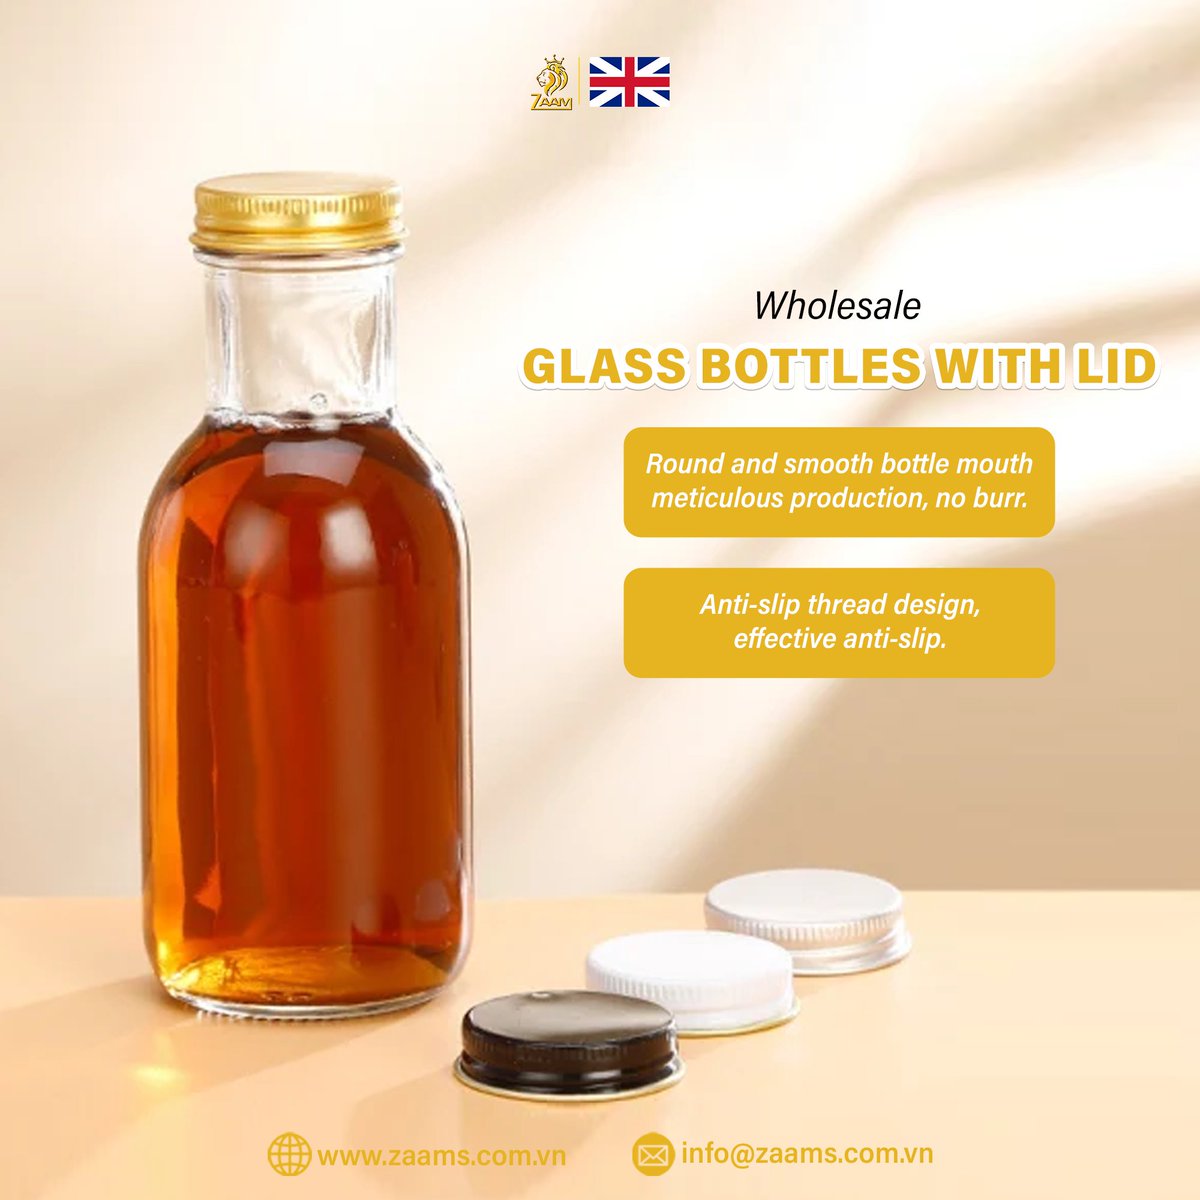 ✨Bid farewell to concerns about fragile or opaque glass bottles for your beverage storage needs!✨

#glassbottle #drink #QualityInvestment #RaiseTheBar #glassware #glasspackaging
#zaam #zaamuk #sourcing #manufacturer #glass #juice